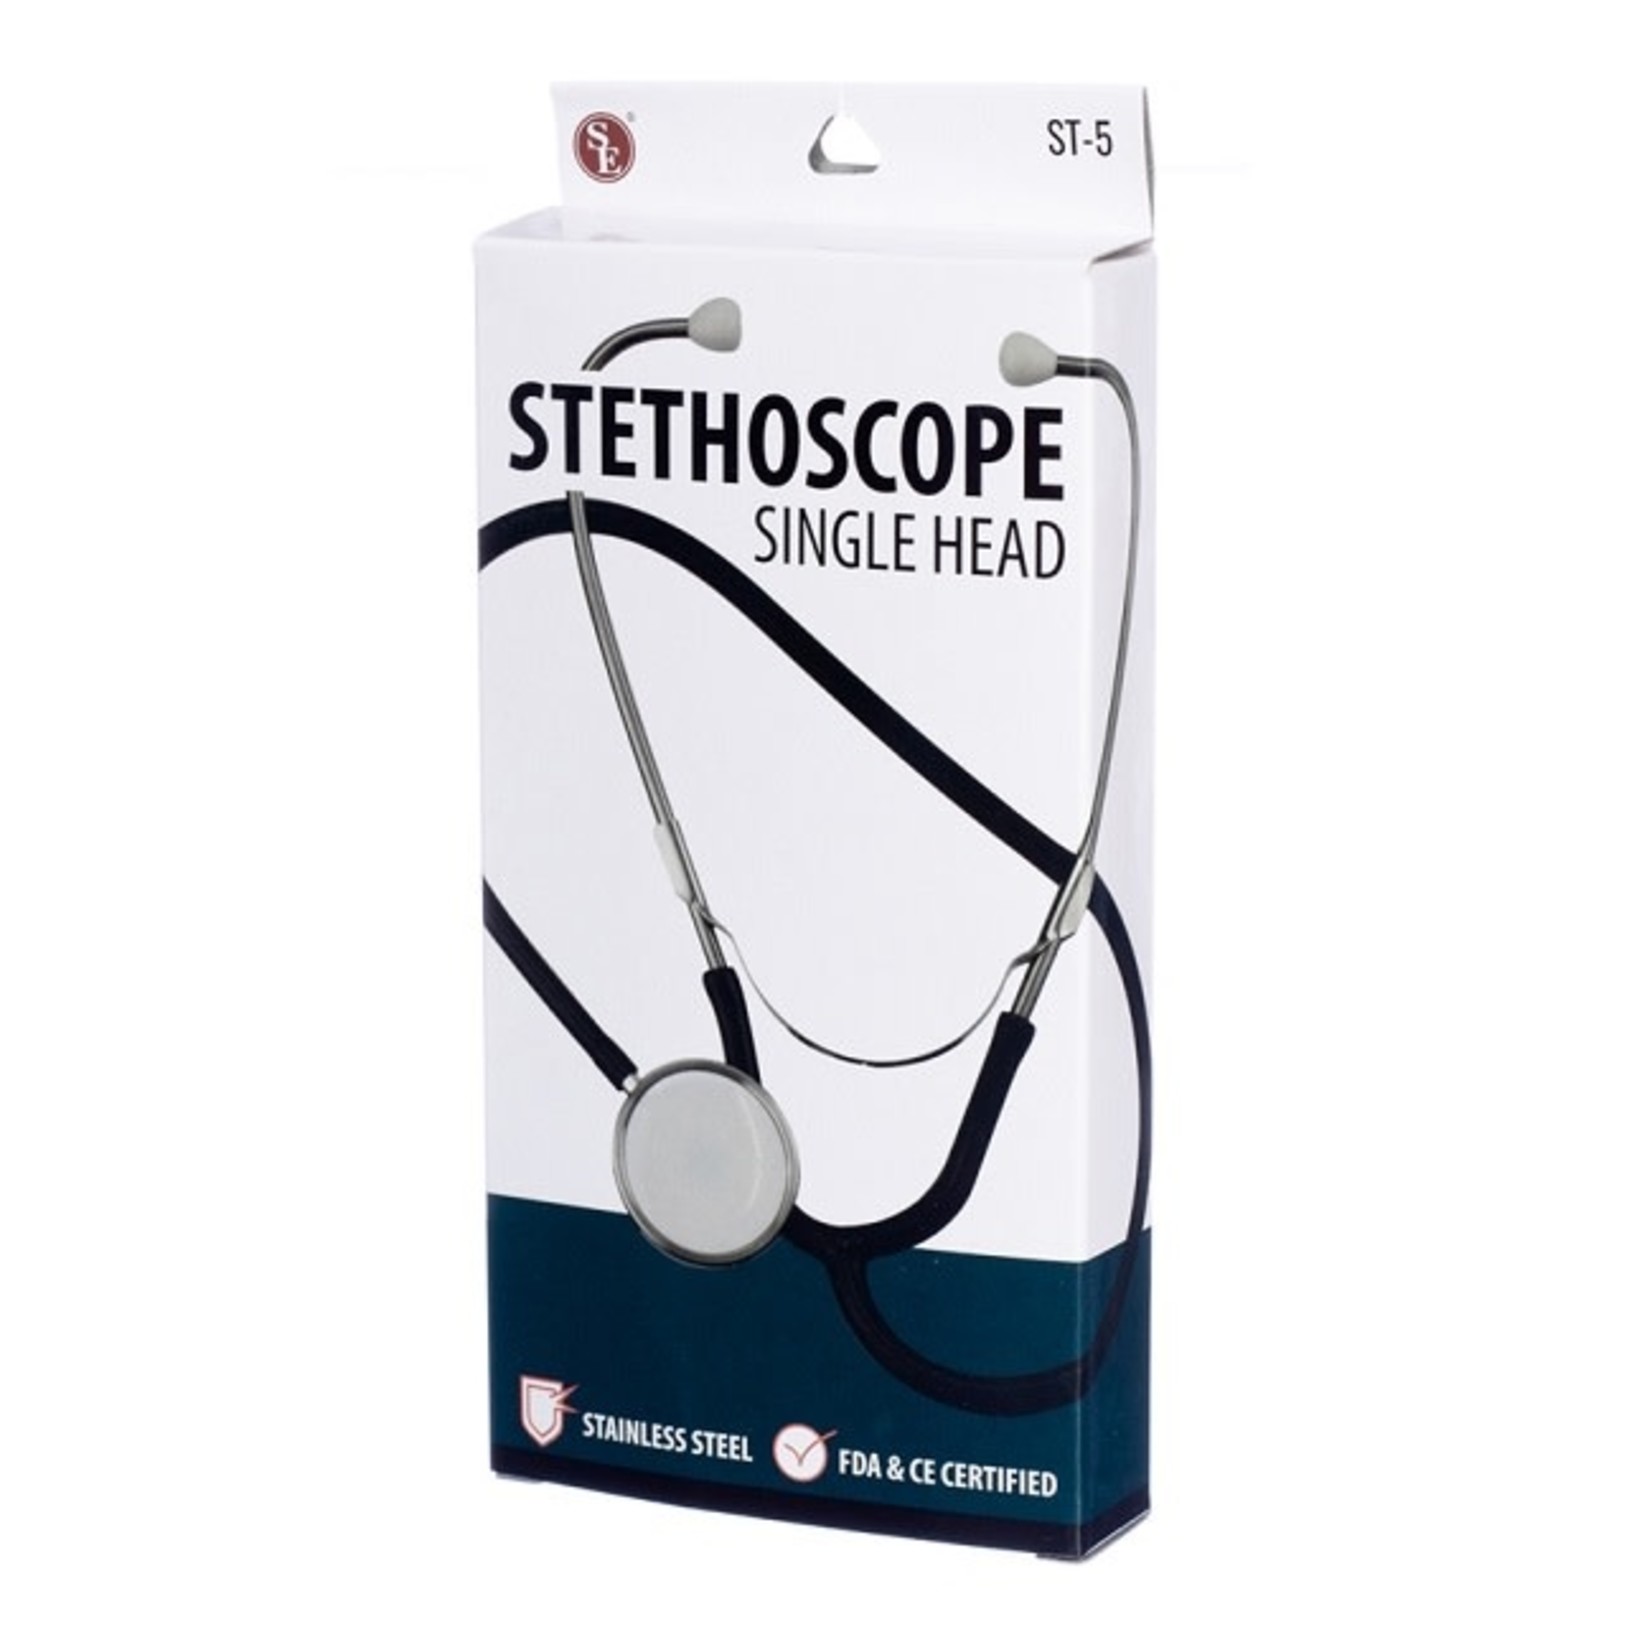 Sona SE Single Head Stethoscope With Stainless Steel Headset & EarTubes (FDA & CE Certified)